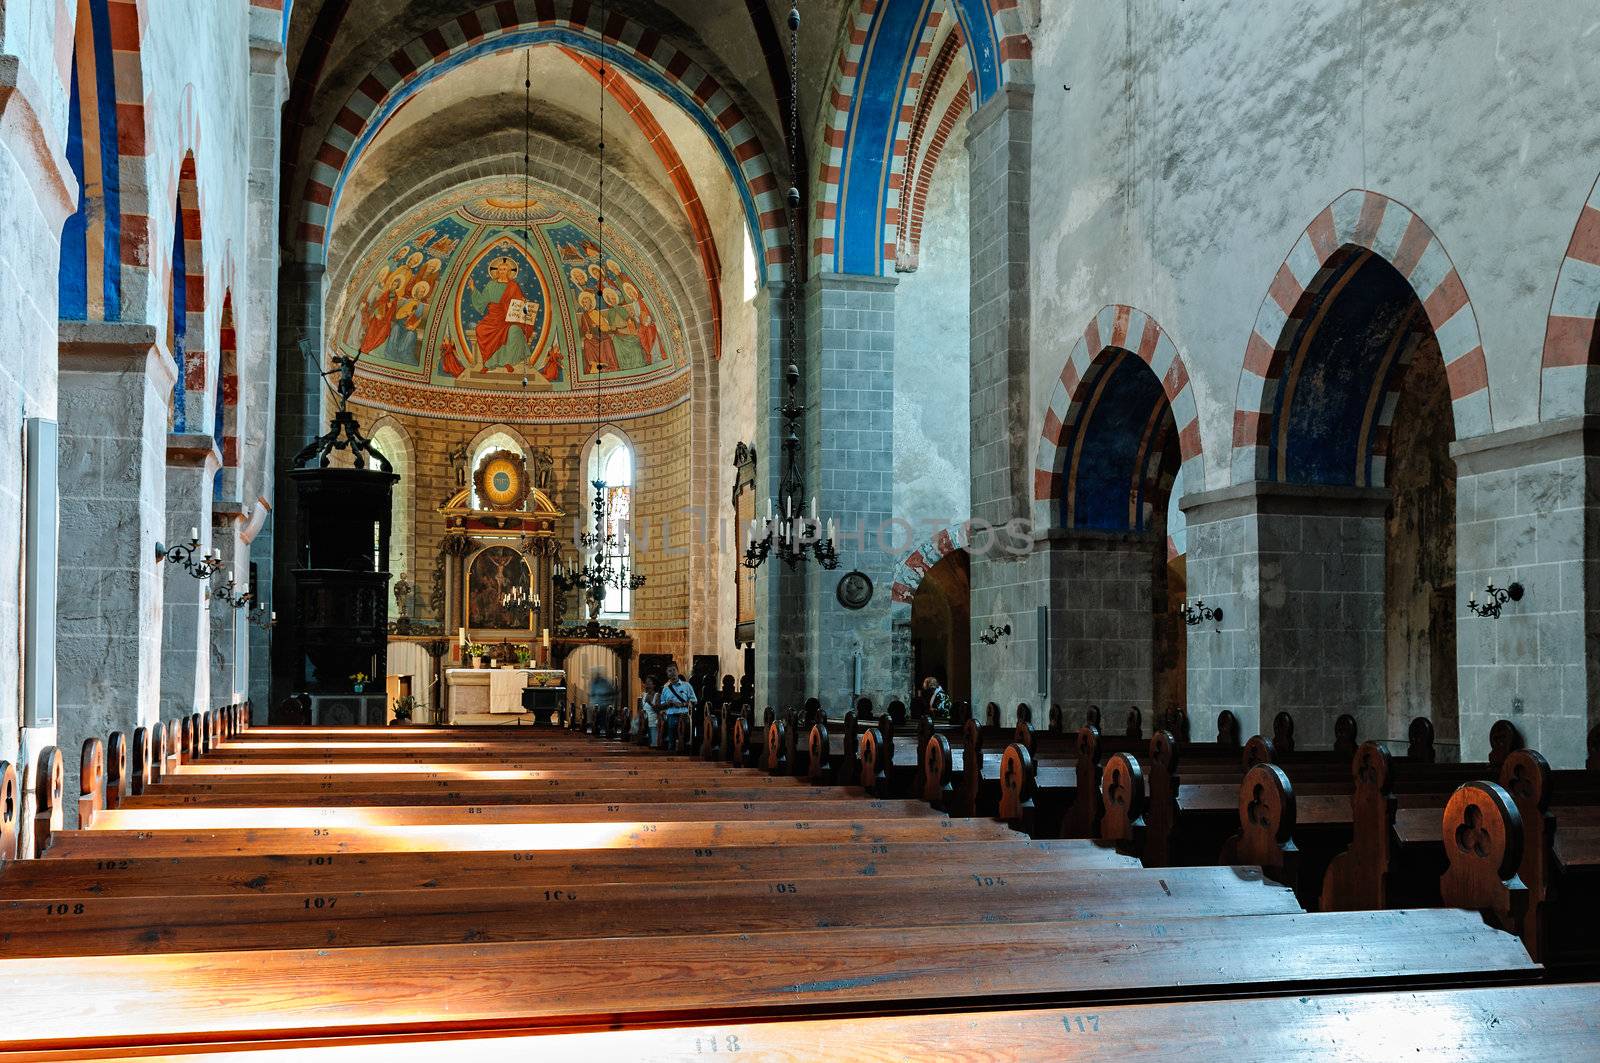 Kloster zinna interior by francescobencivenga